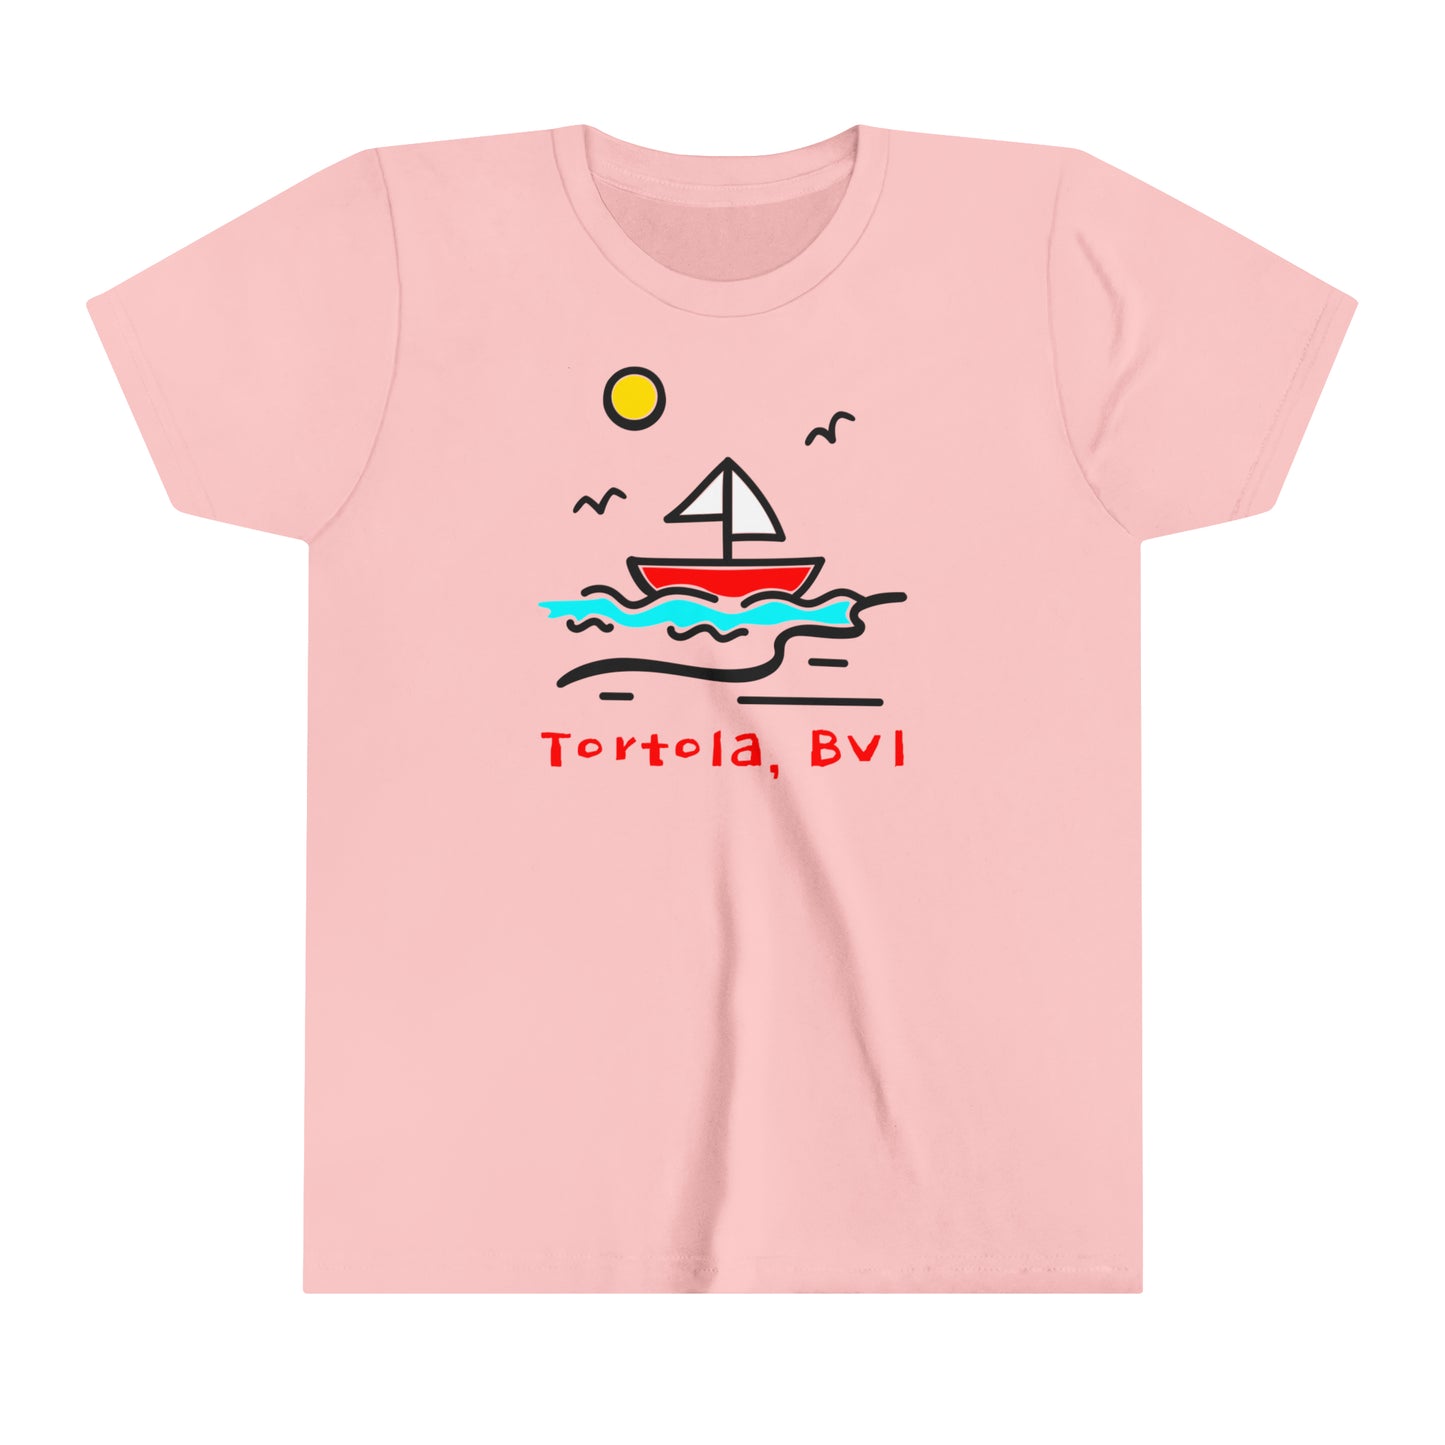 "Sailboat | Tortola" Youth S/S Tee